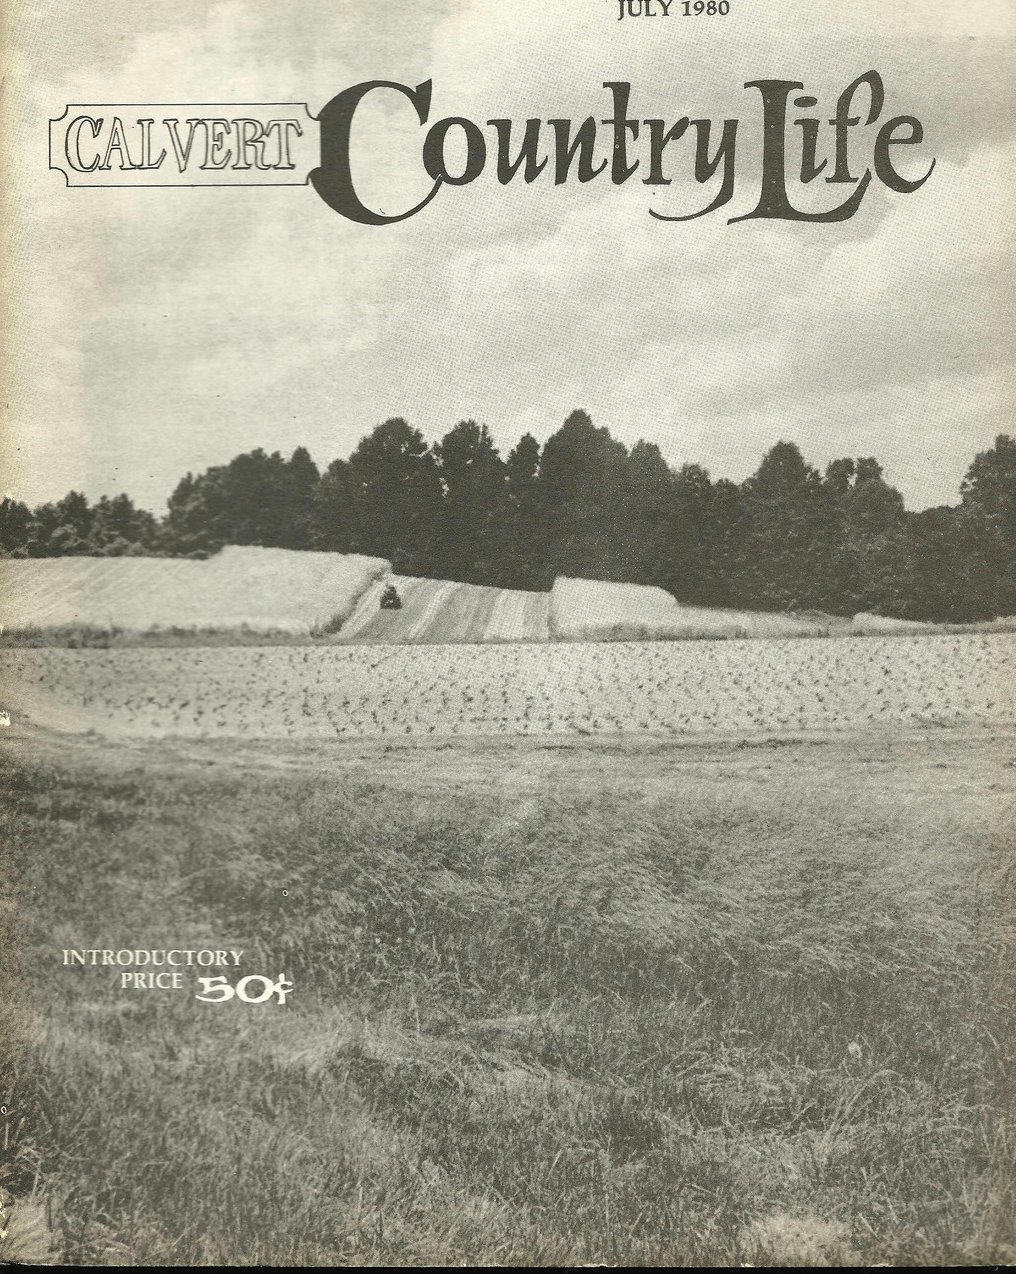 Calvert Country Life Vol 1 No 2 July 1980 Vintage Magazine